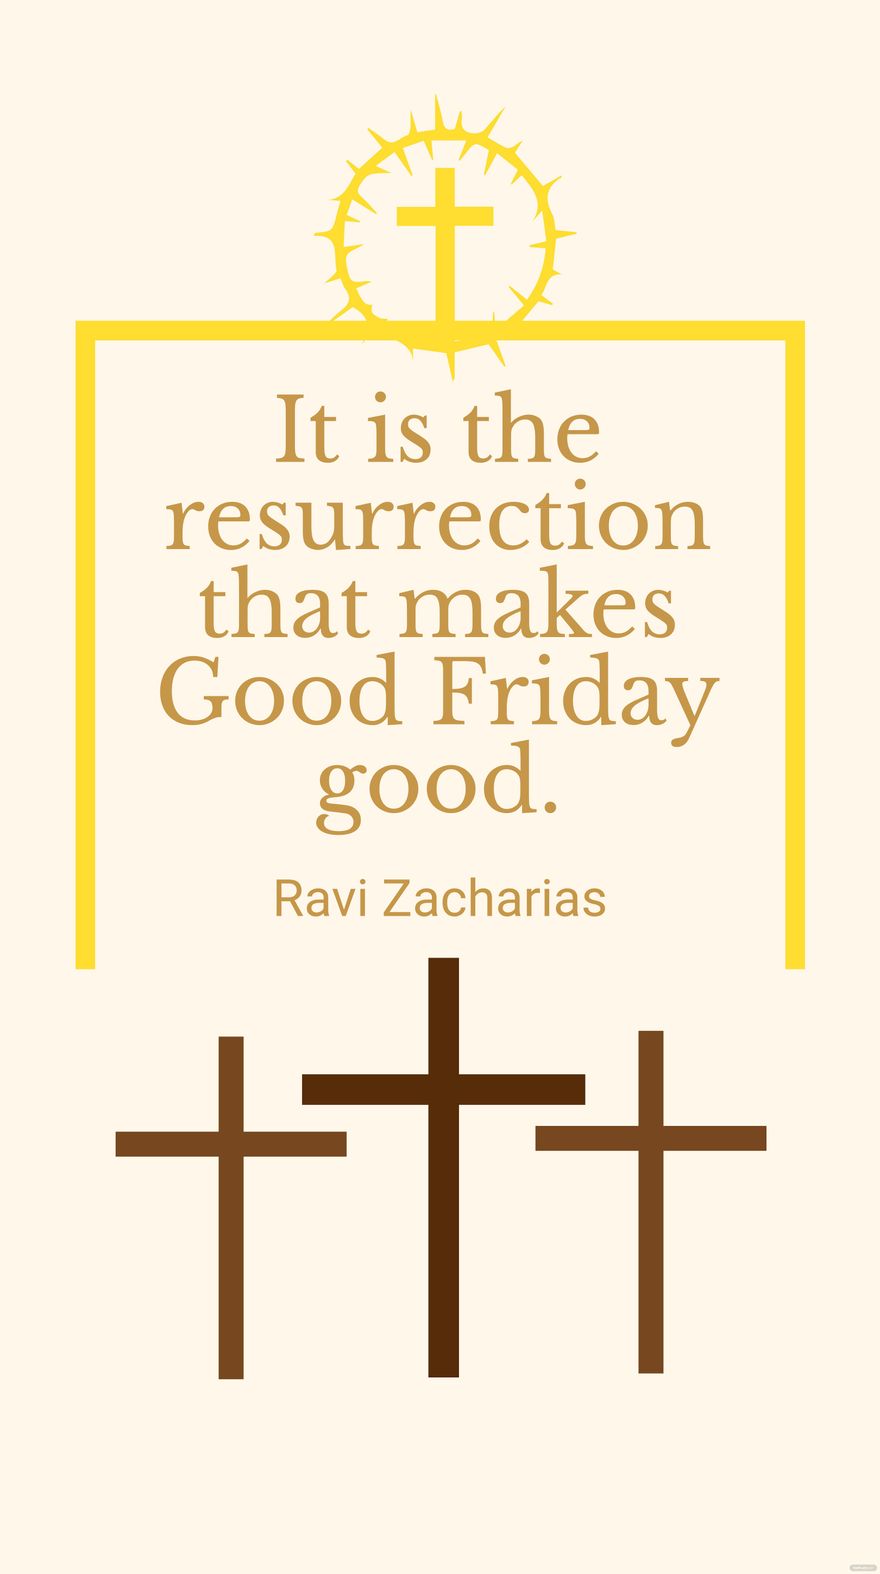 Free Ravi Zacharias - It is the resurrection that makes Good Friday good.